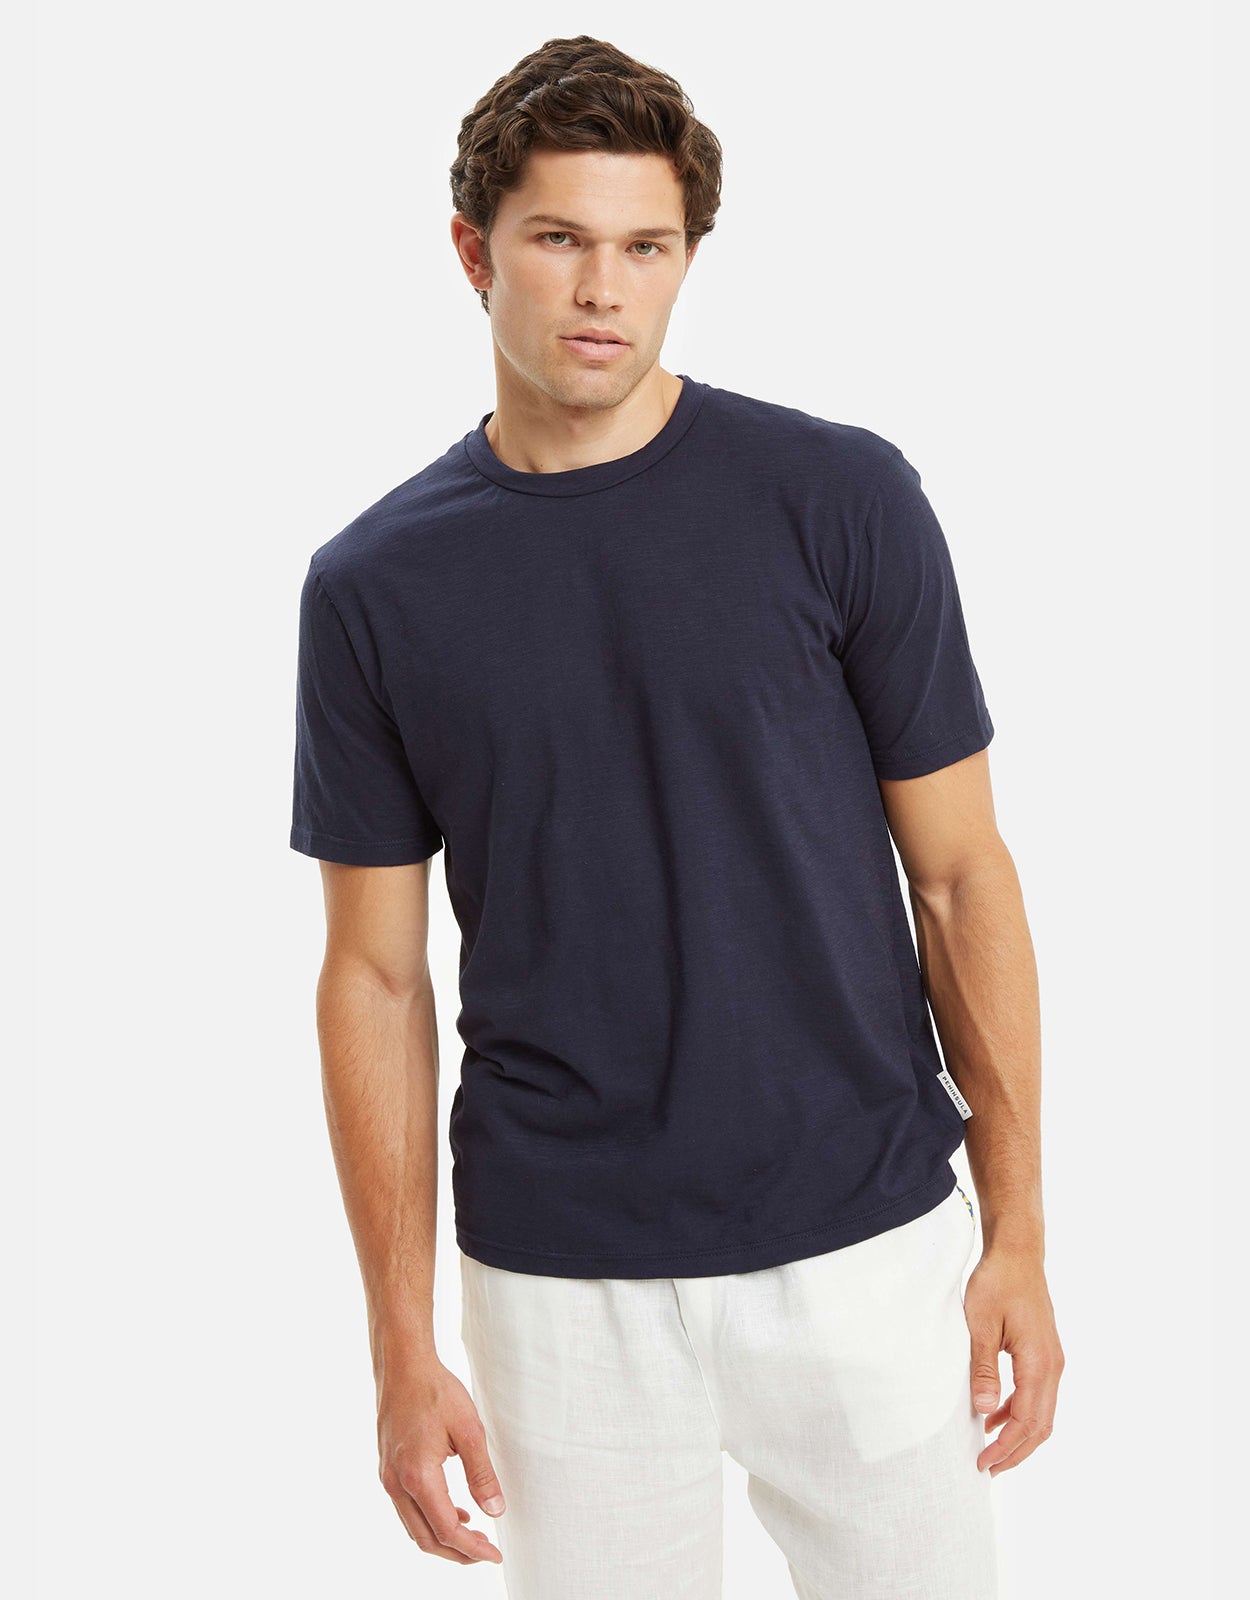 Stromboli Linen and Cotton T-Shirt